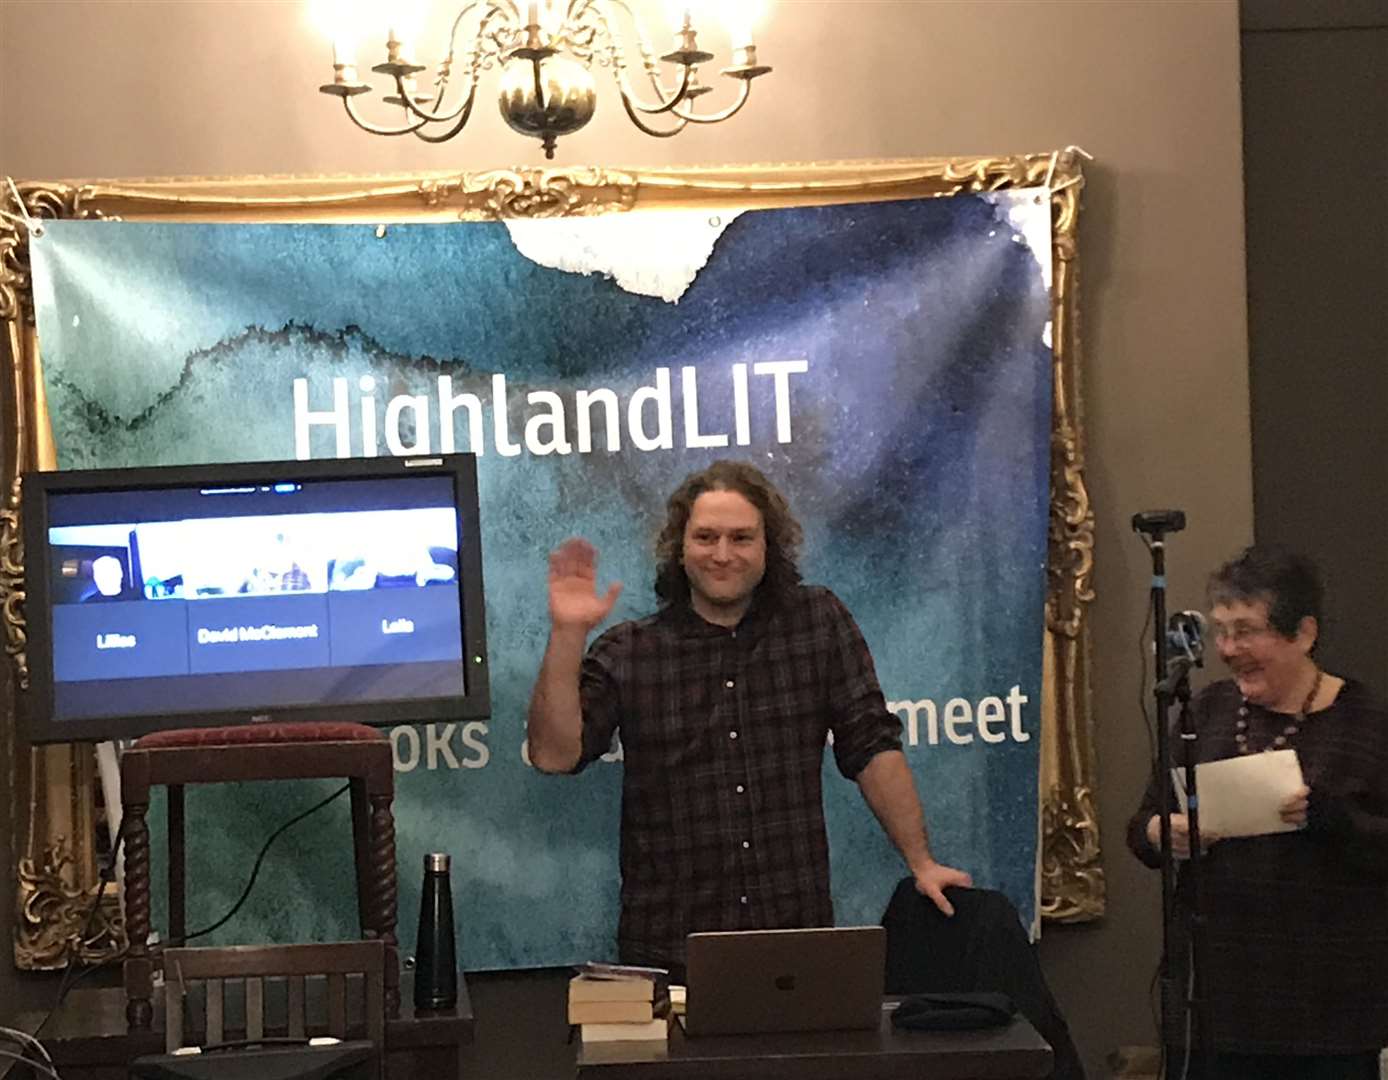 Crime writer Gareth Halliday guested at HighlandLIT.